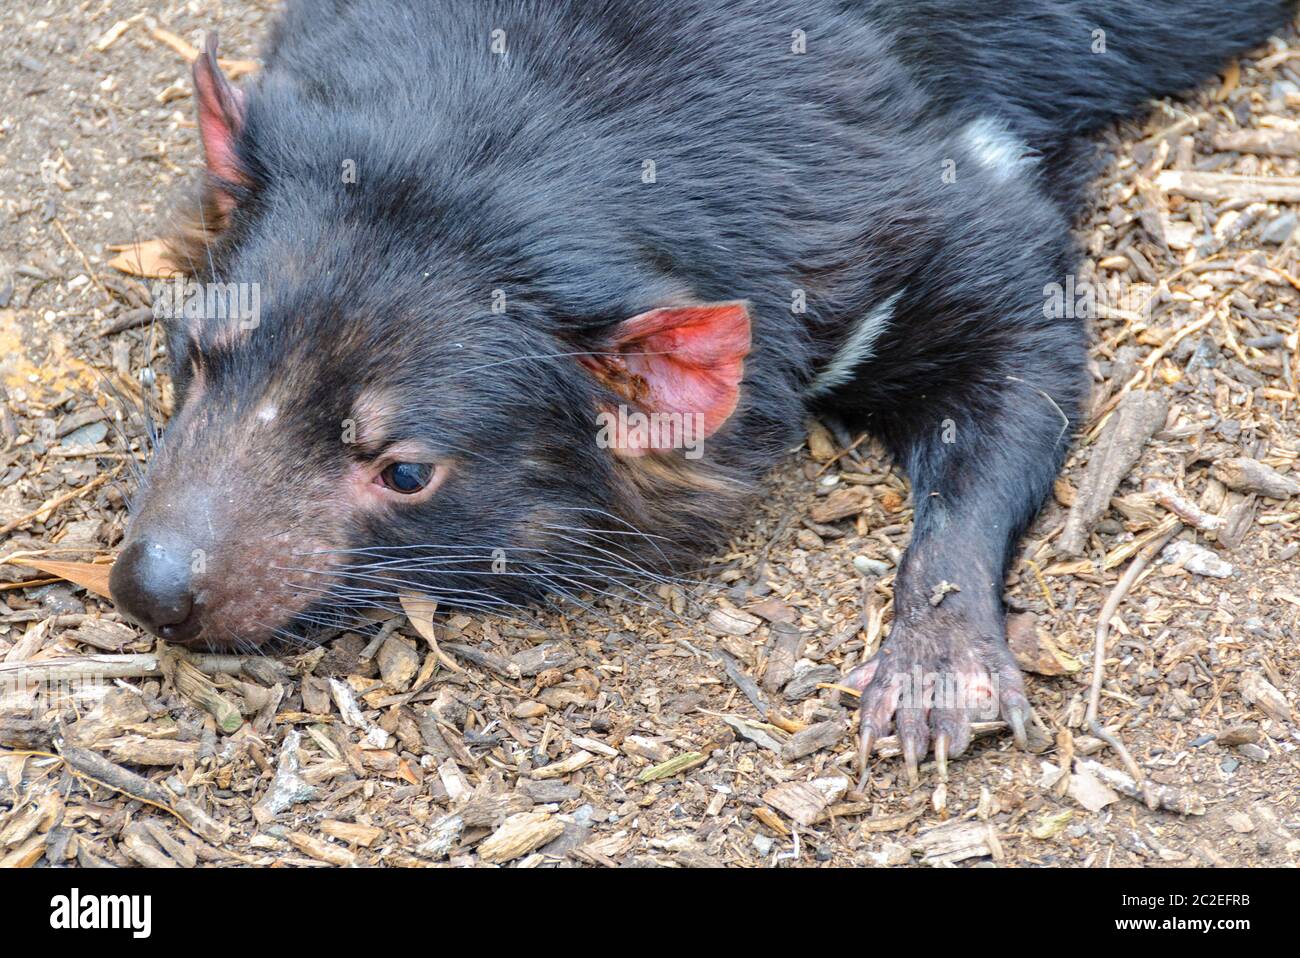 The Tasmanian Devil is the world's largest surviving carnivorous marsupial - Healesville, Victoria, Australia Stock Photo